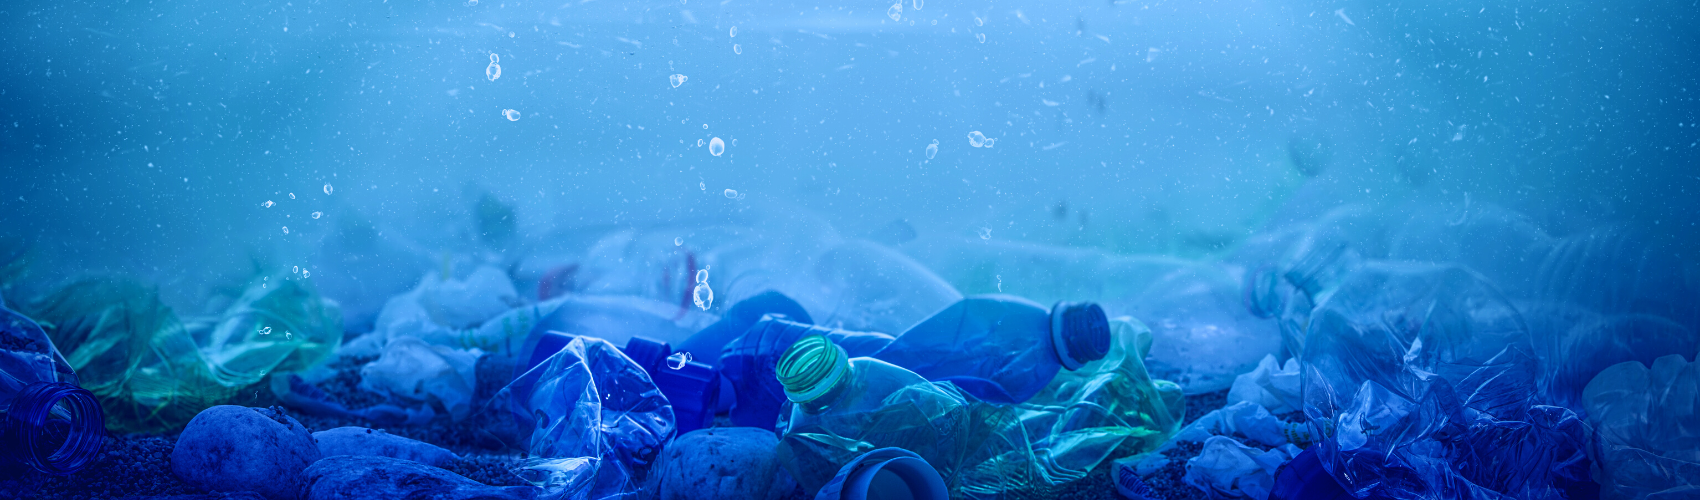 Plastic water bottles under water